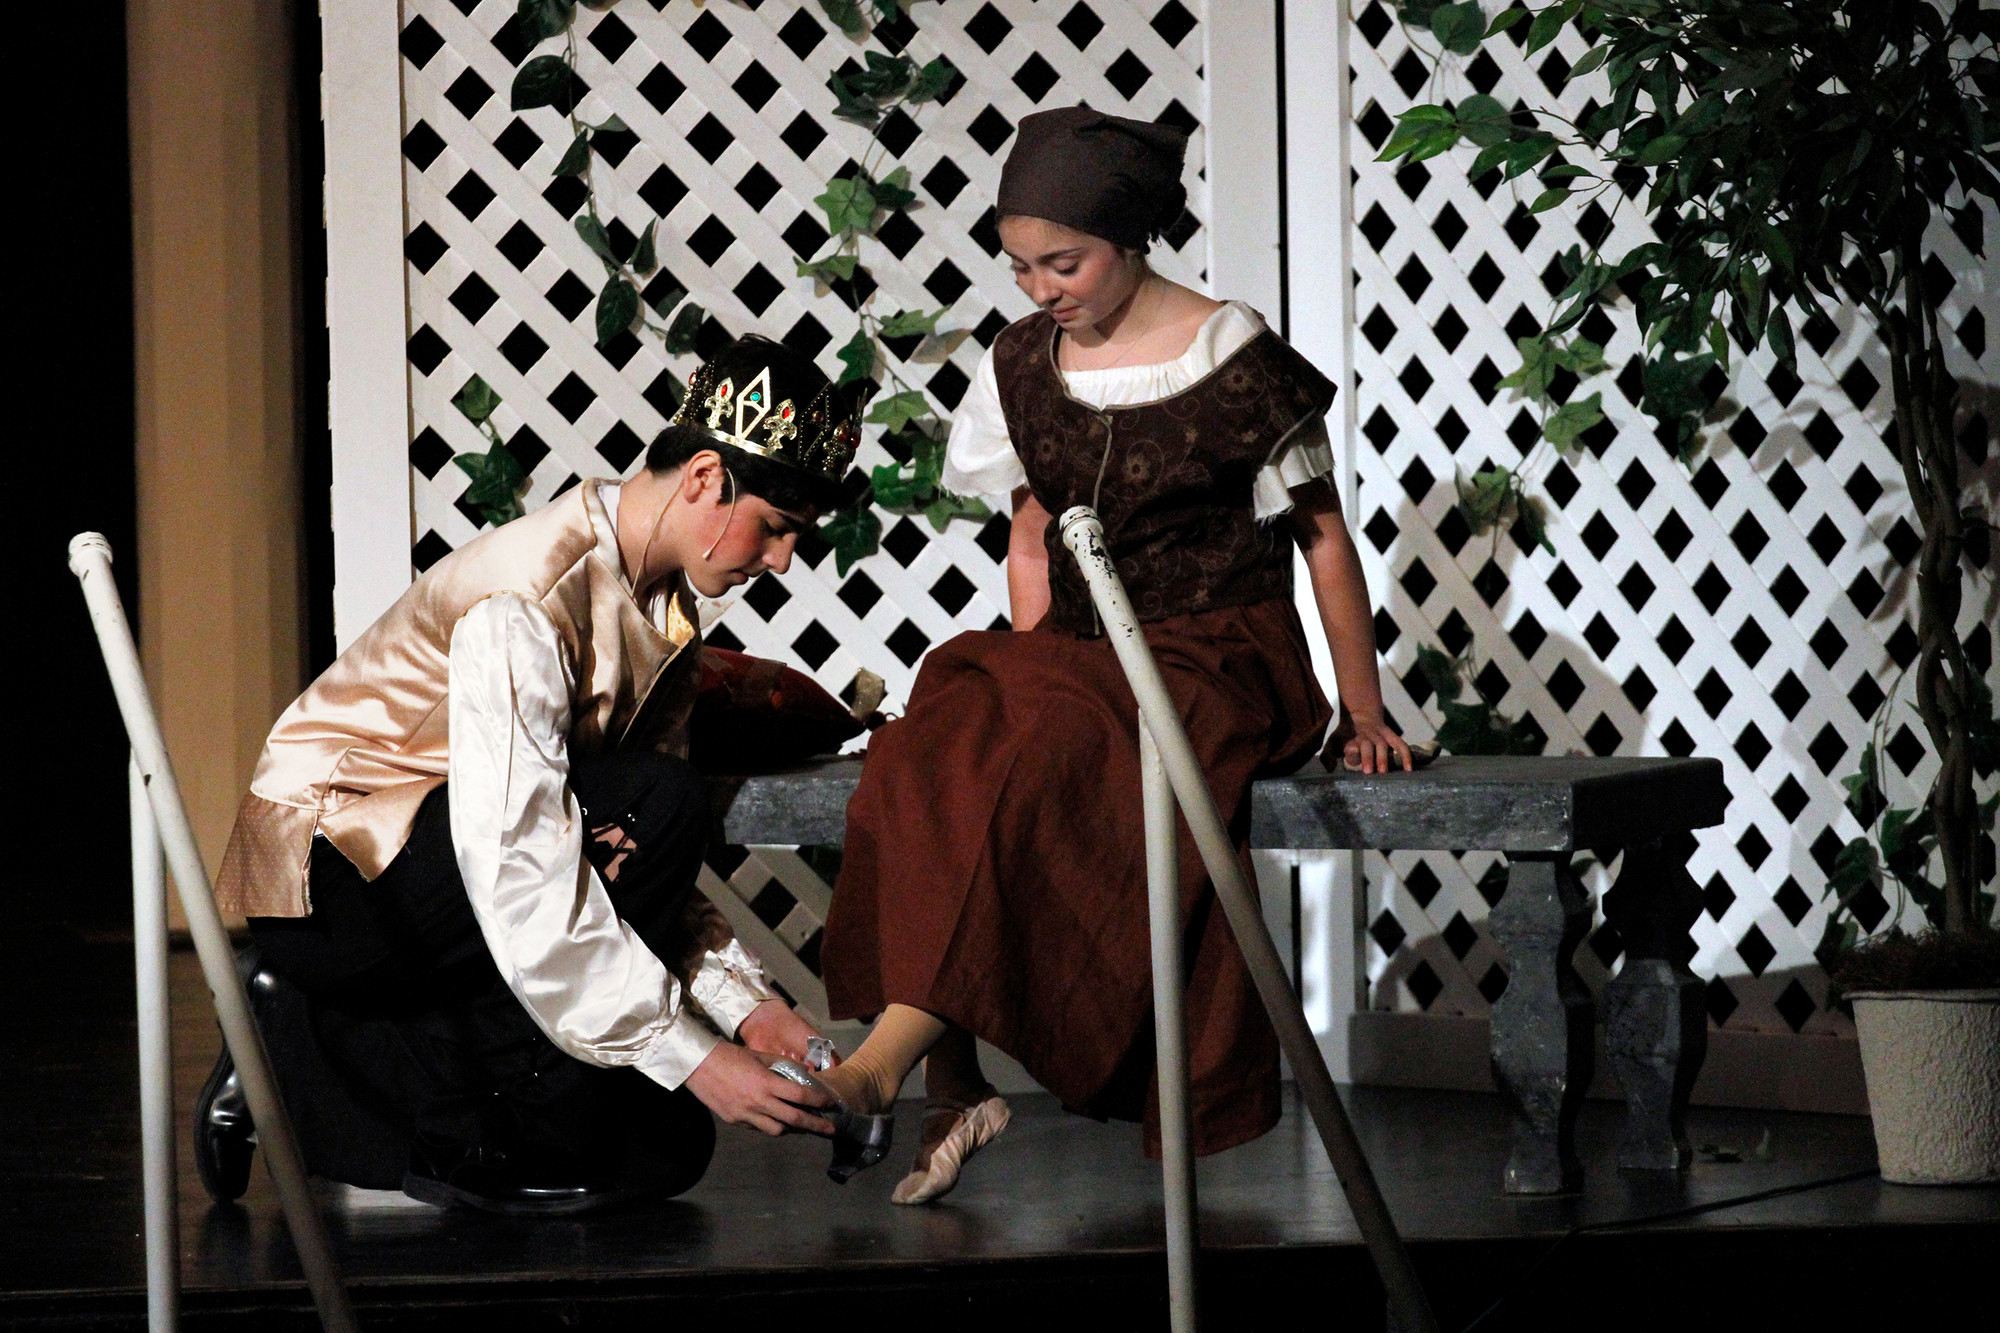 Nicholas Pandolfo as the Prince tries the glass slipper on Cinderella’s (Melissa Aliotta’s) foot.